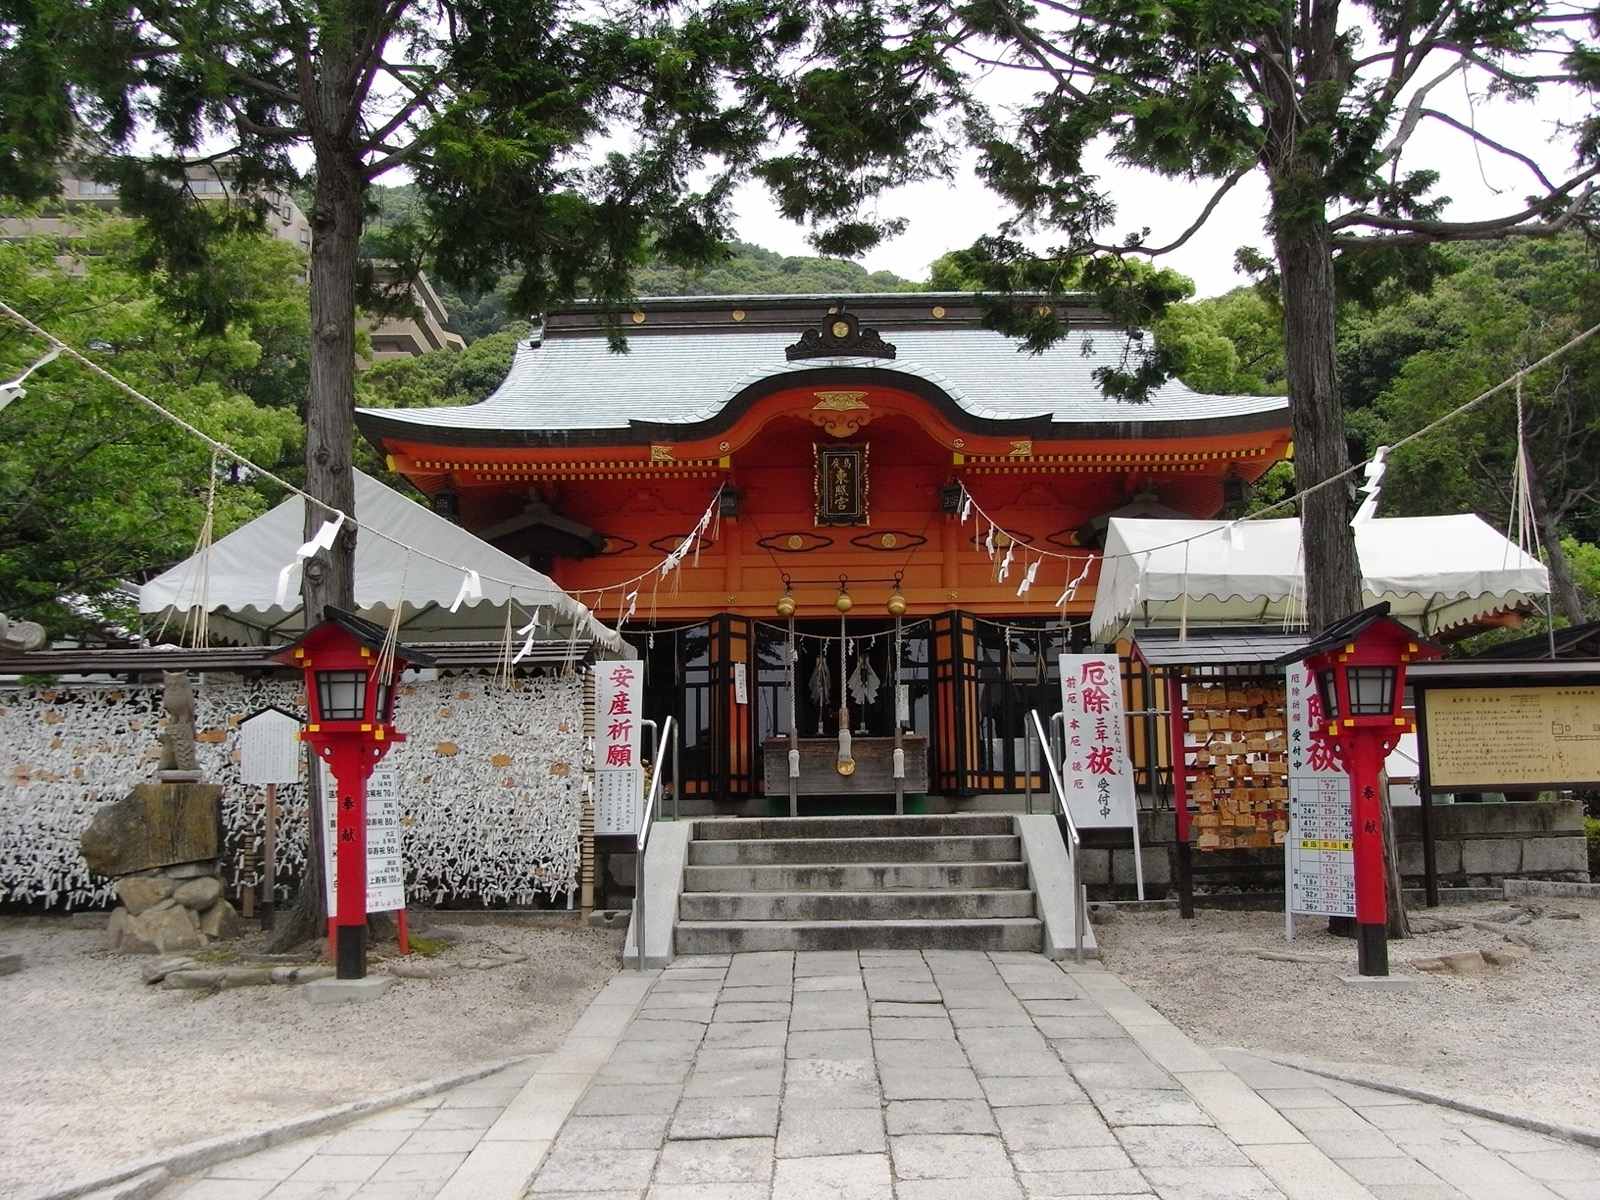 Photo of Hiroshima Toshogu Shrine, Japan (広島東照宮 by Taisyo)